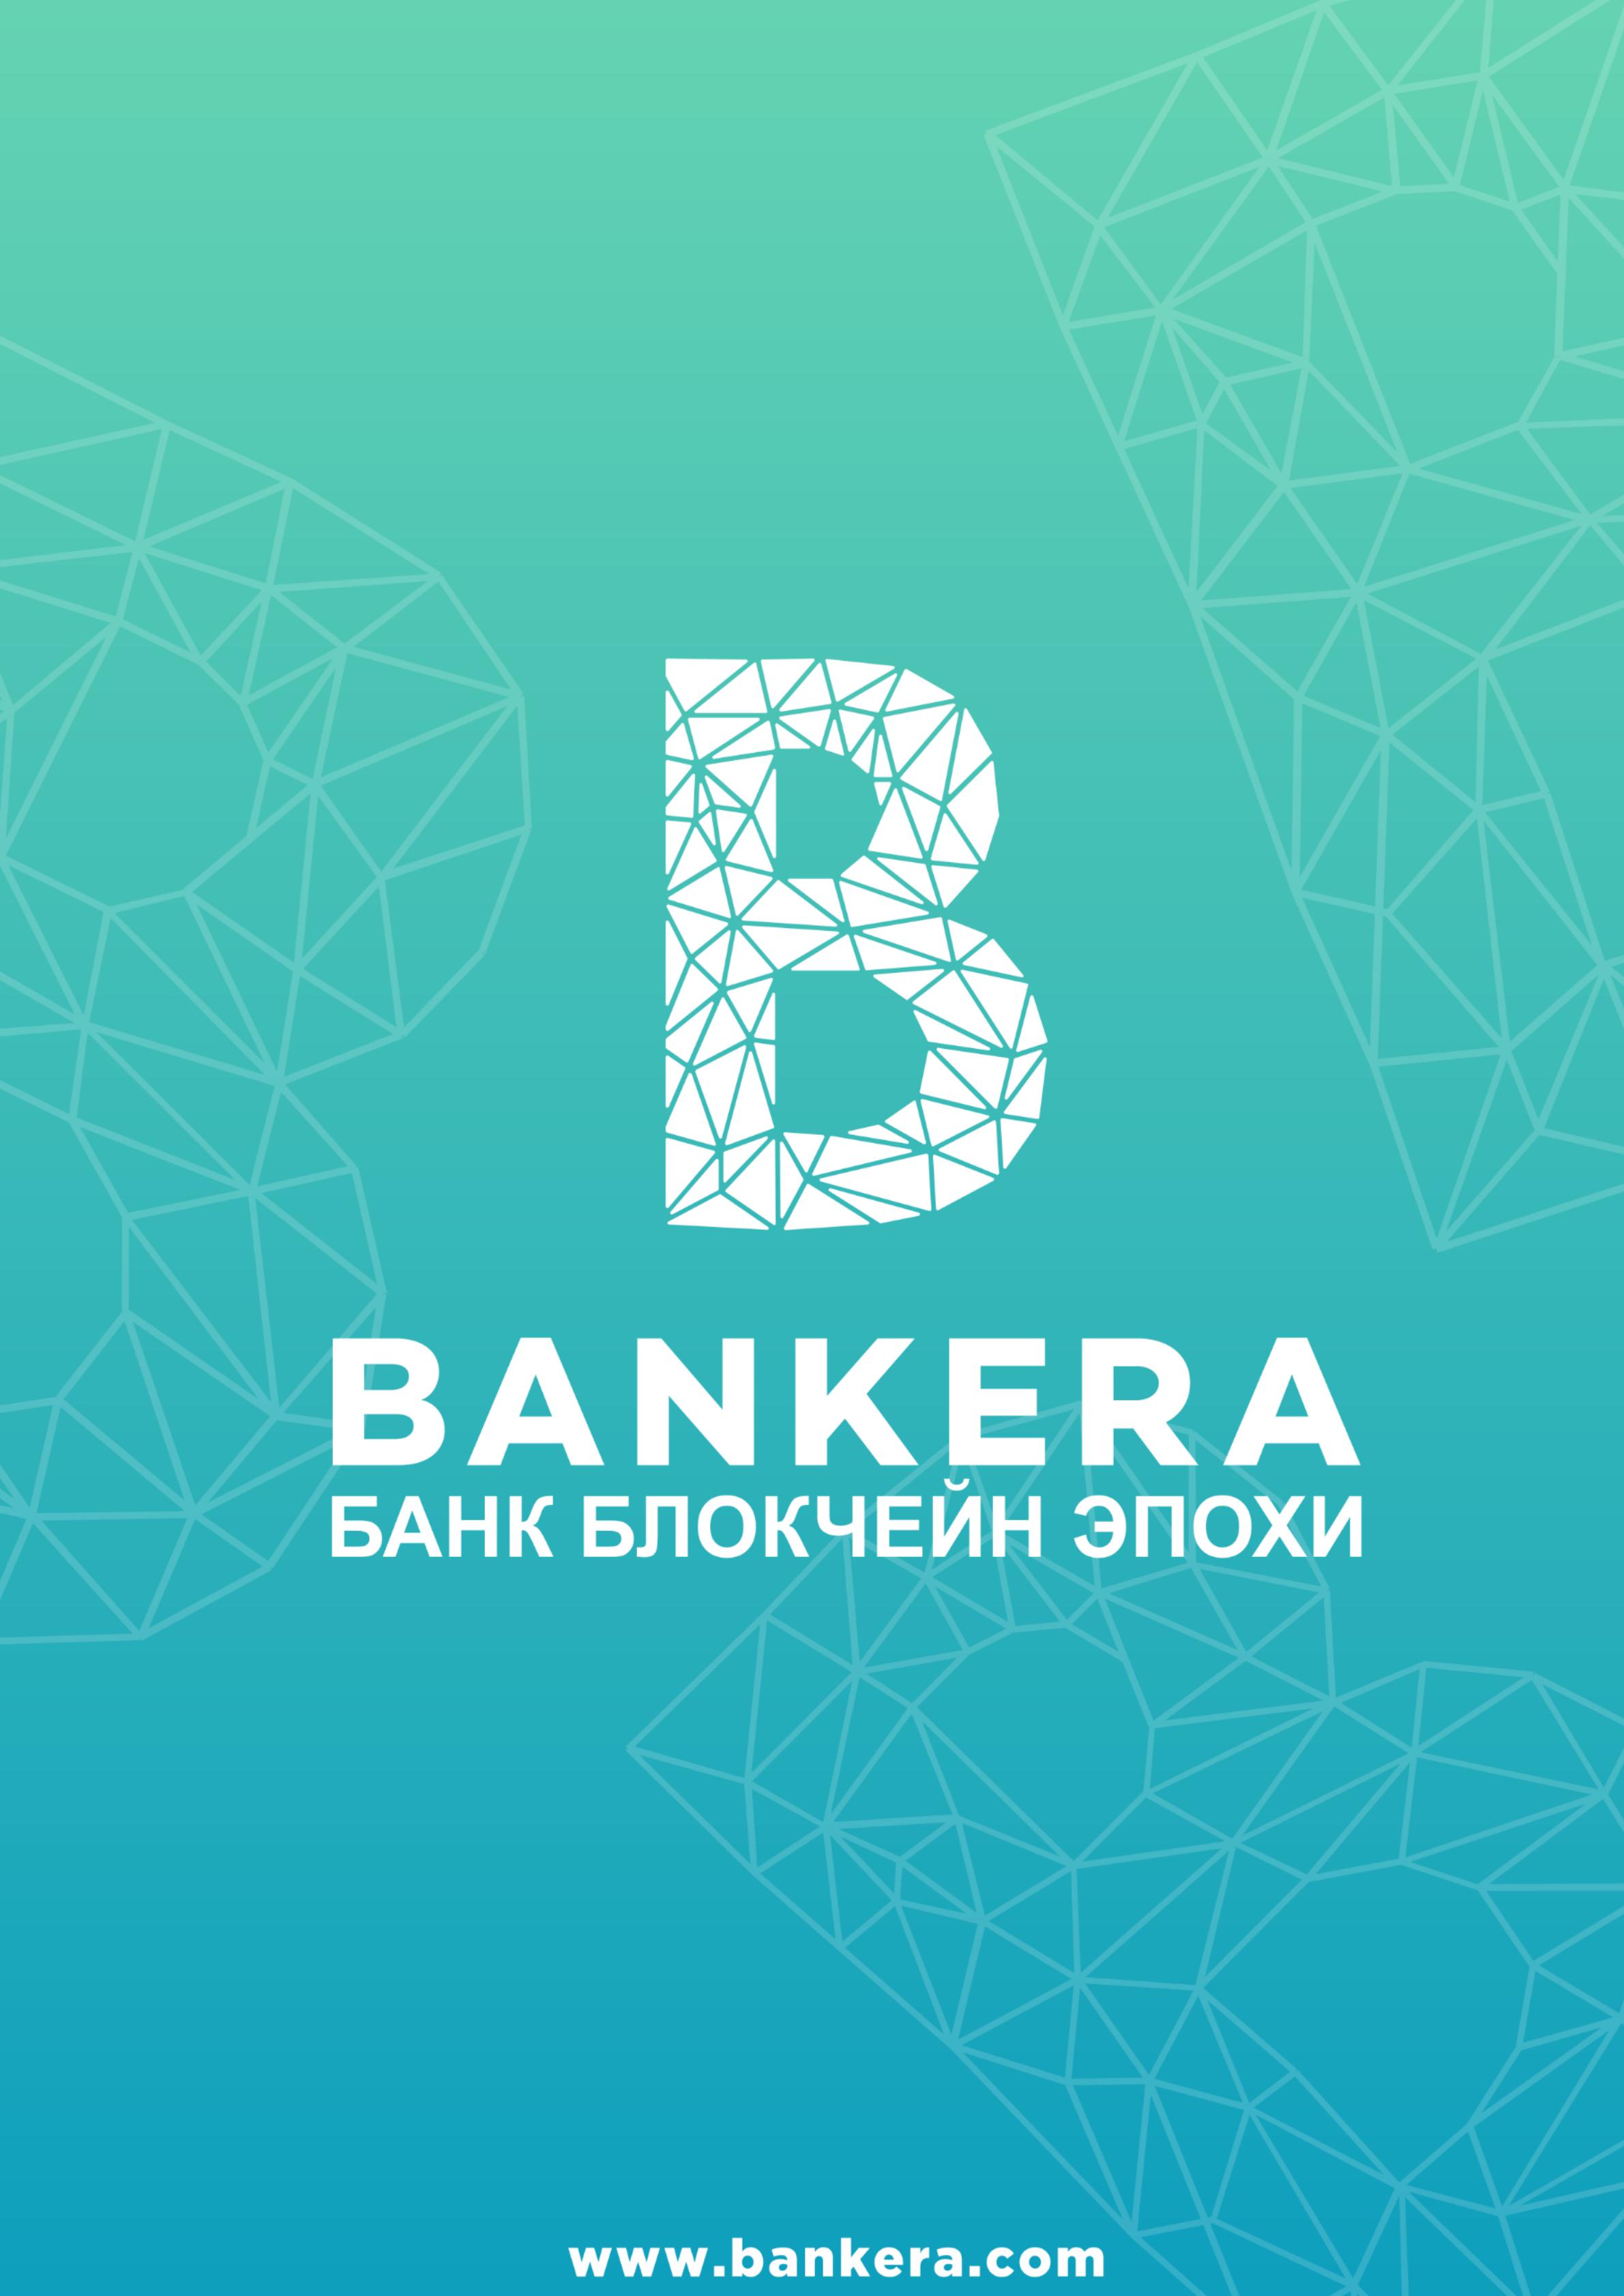 BNK_Bankera_whitepaper_RU_00.jpg